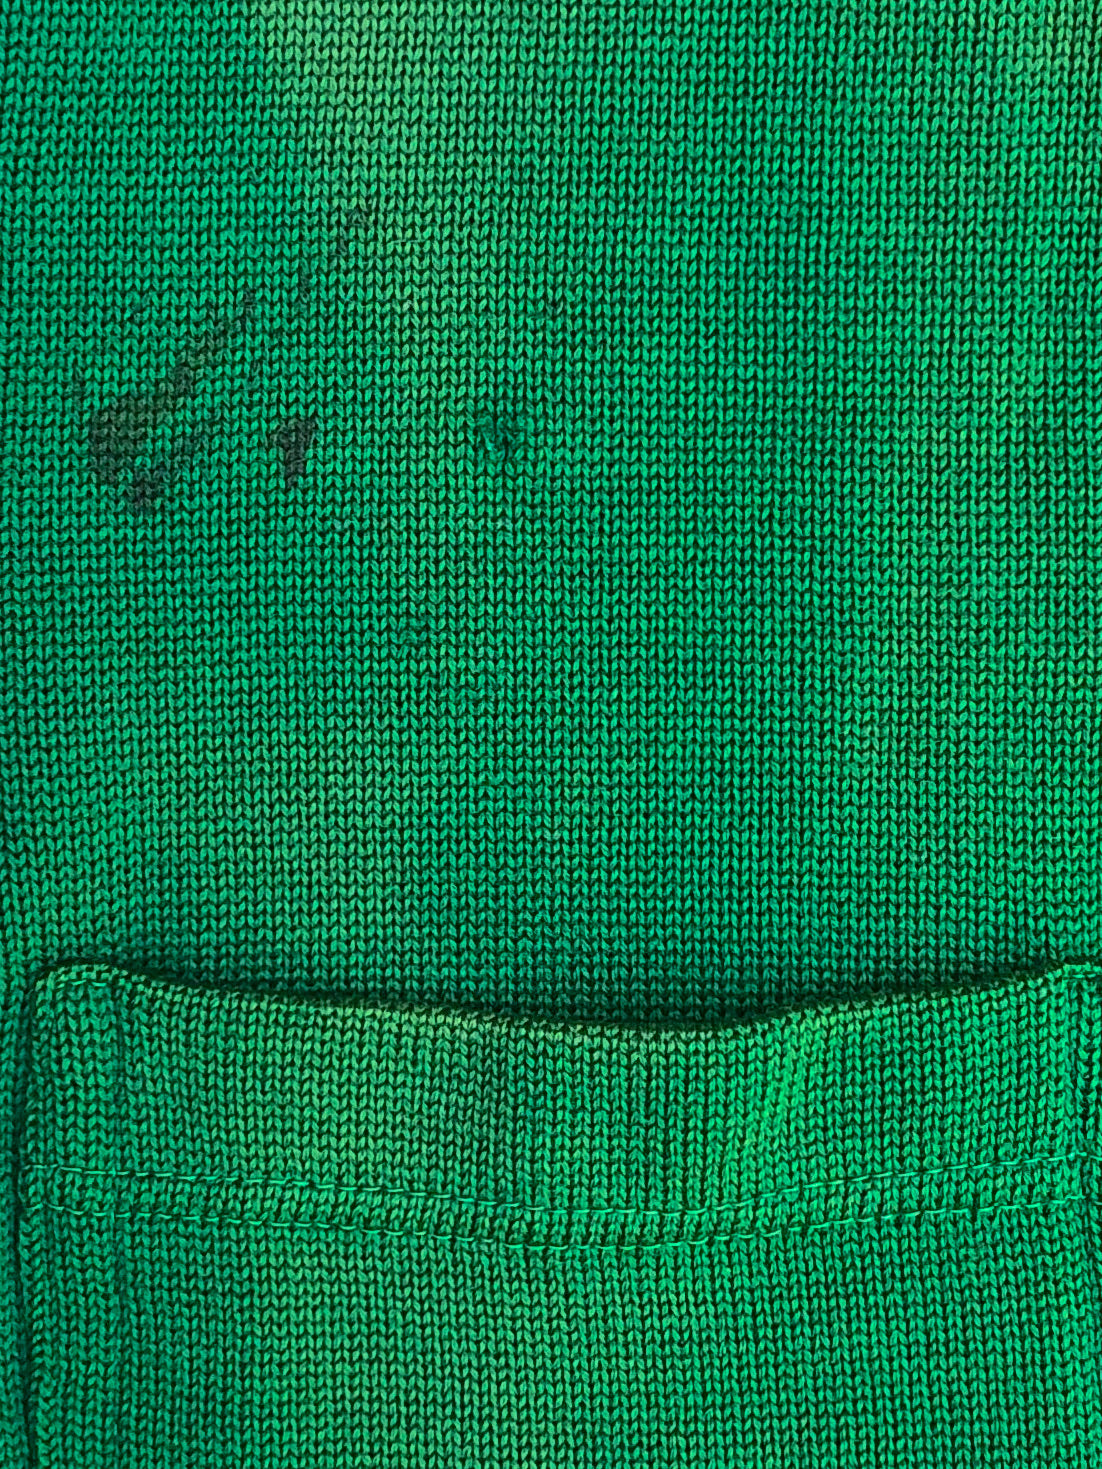 1940s Sun Faded Green “Stratton” Varsity Knit Cardigan